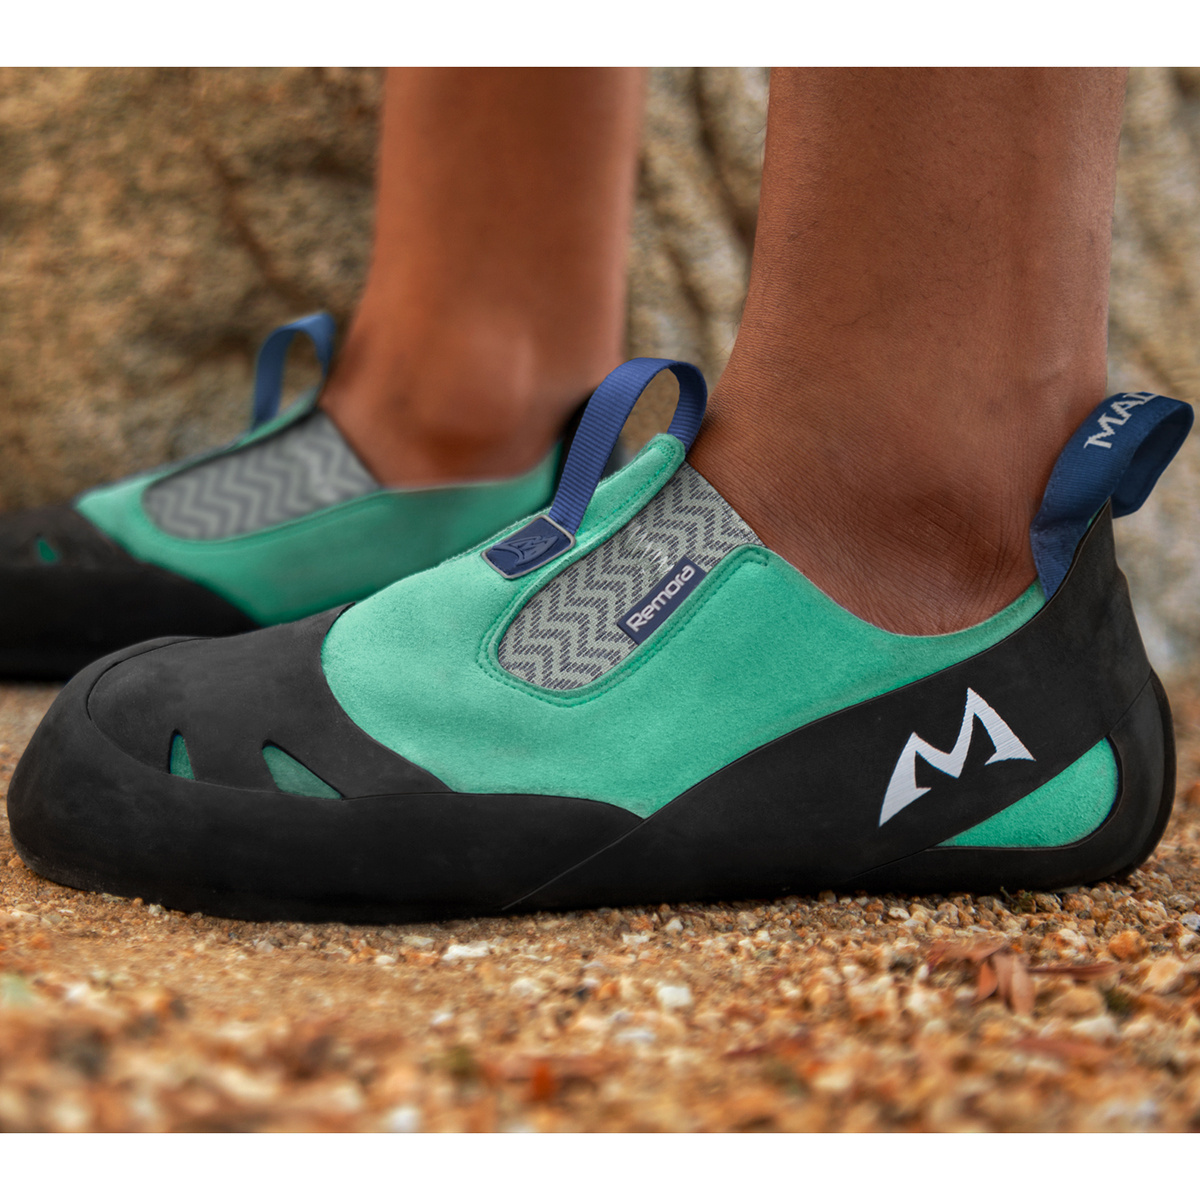  Mad Rock Remora LV Climbing Shoe | Climbing